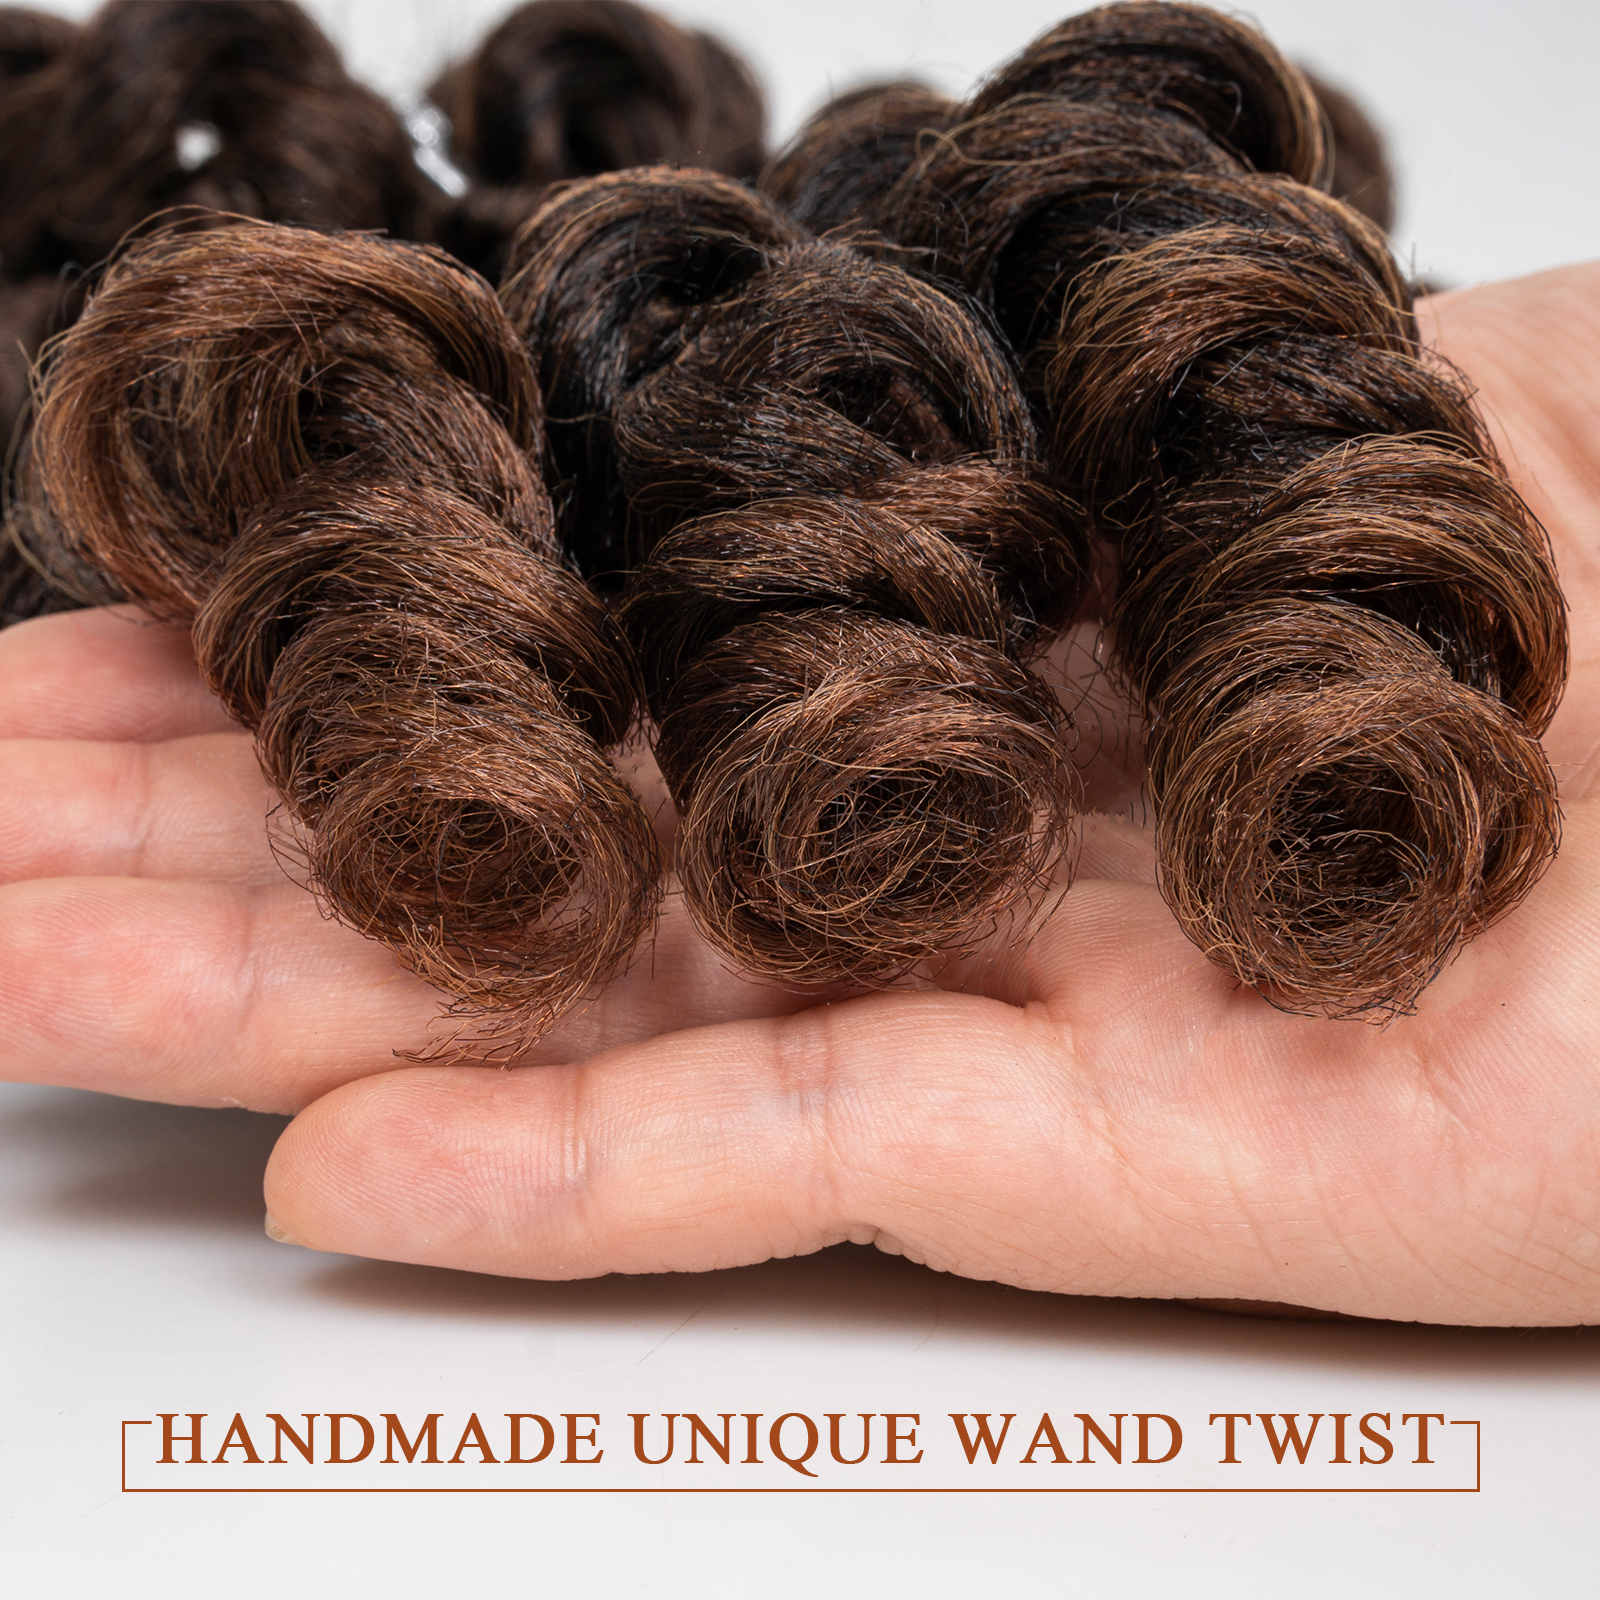 𝗙𝗿𝗮𝗻𝗸𝗲𝗻𝘀𝘁𝗲𝗶𝗻'𝘀 𝗙𝗿𝗶𝘇𝘇 | Toyotress Wand Twist Crochet Hair |10-12